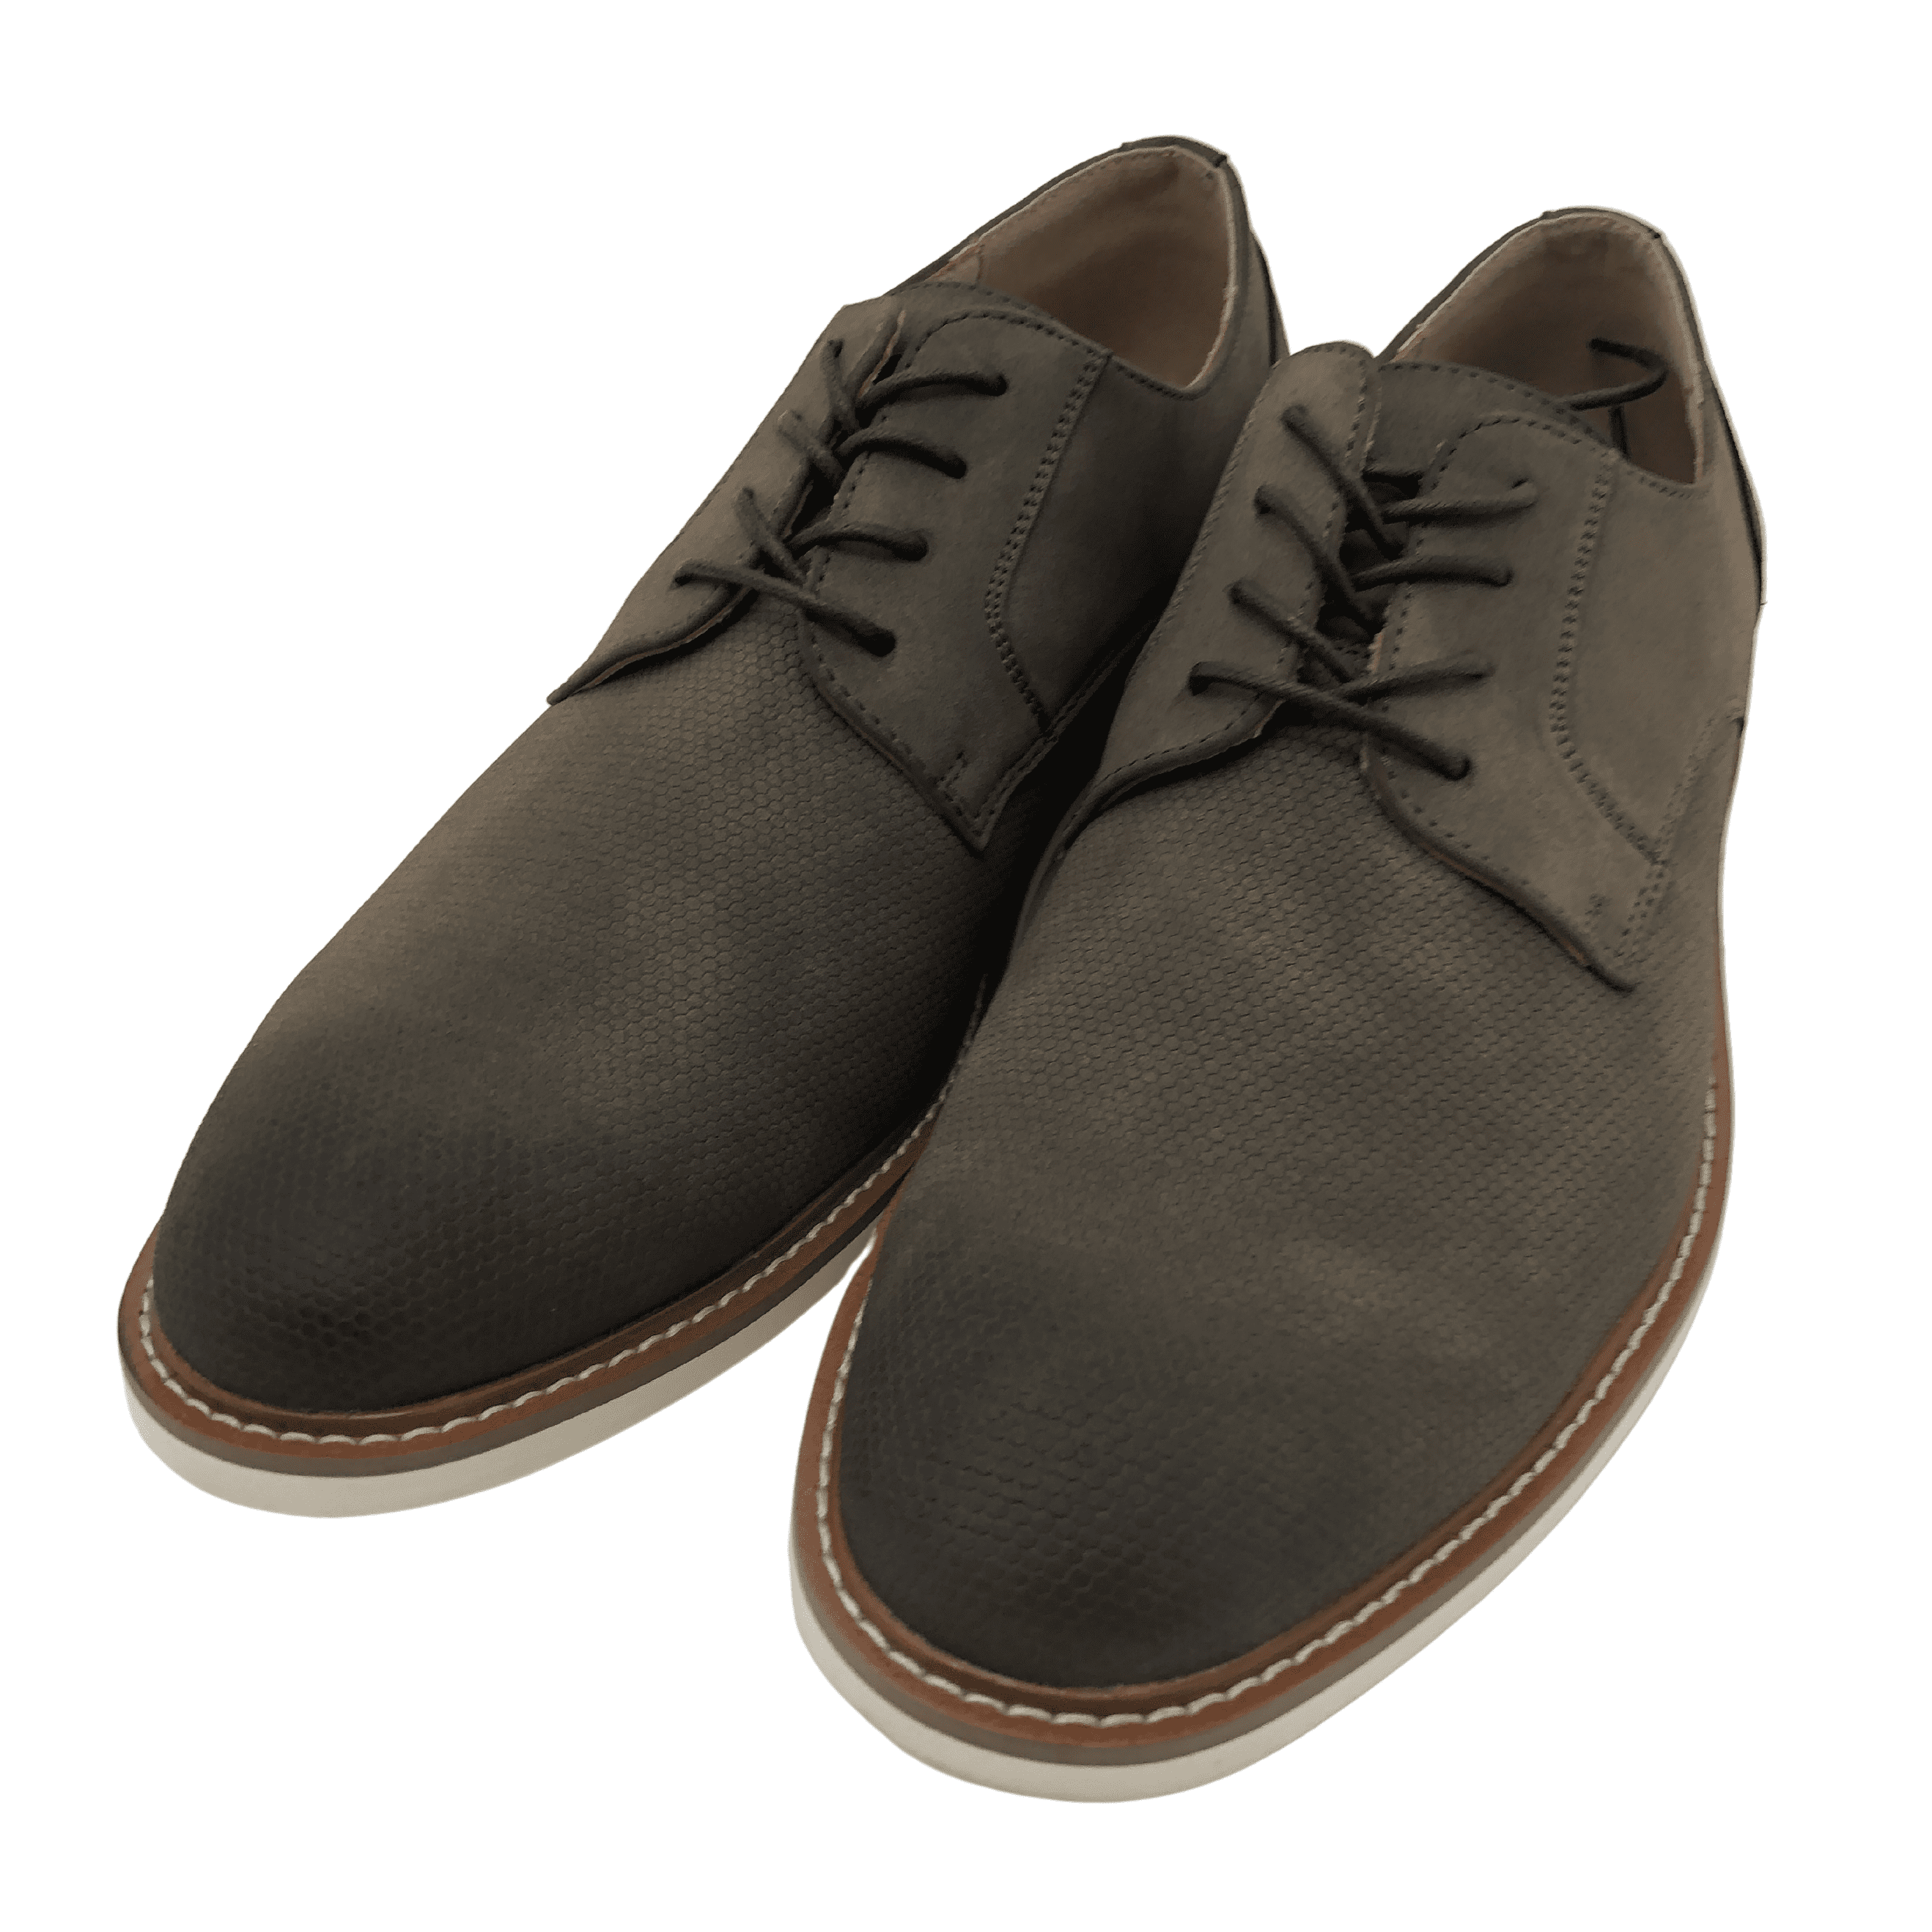 Kenneth Cole Jensen Oxford Shoe / Lace-Up / Grey / Size 10